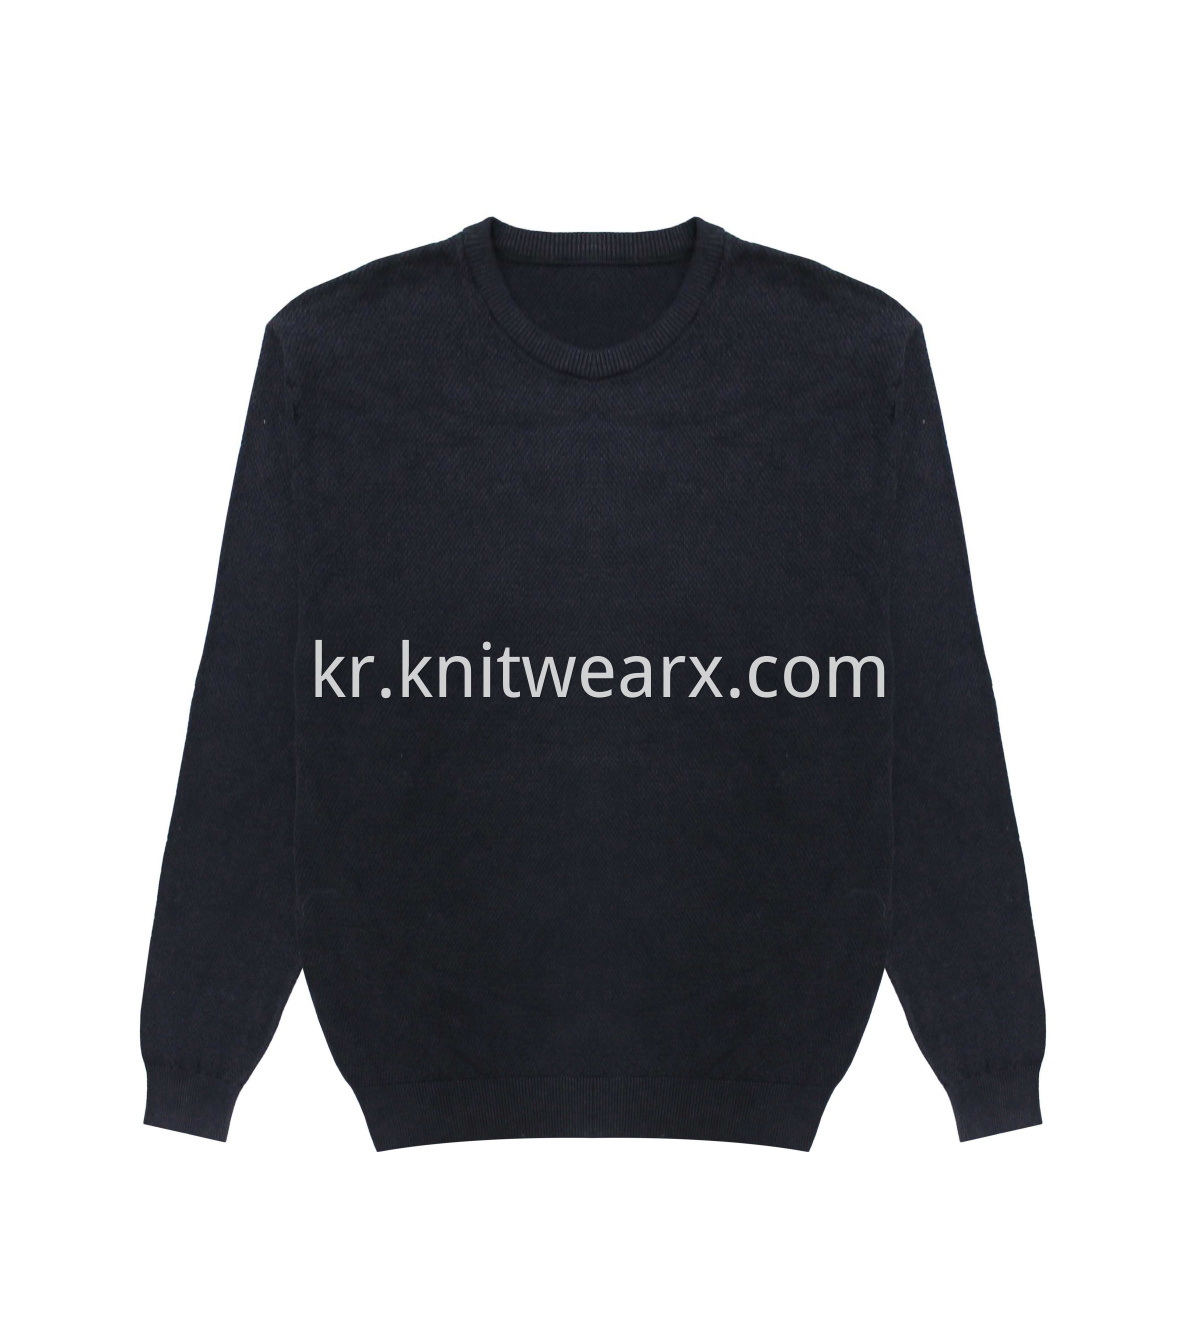 Men's Knitted Cotton Garment-dye Stonewash Crewneck Pullover